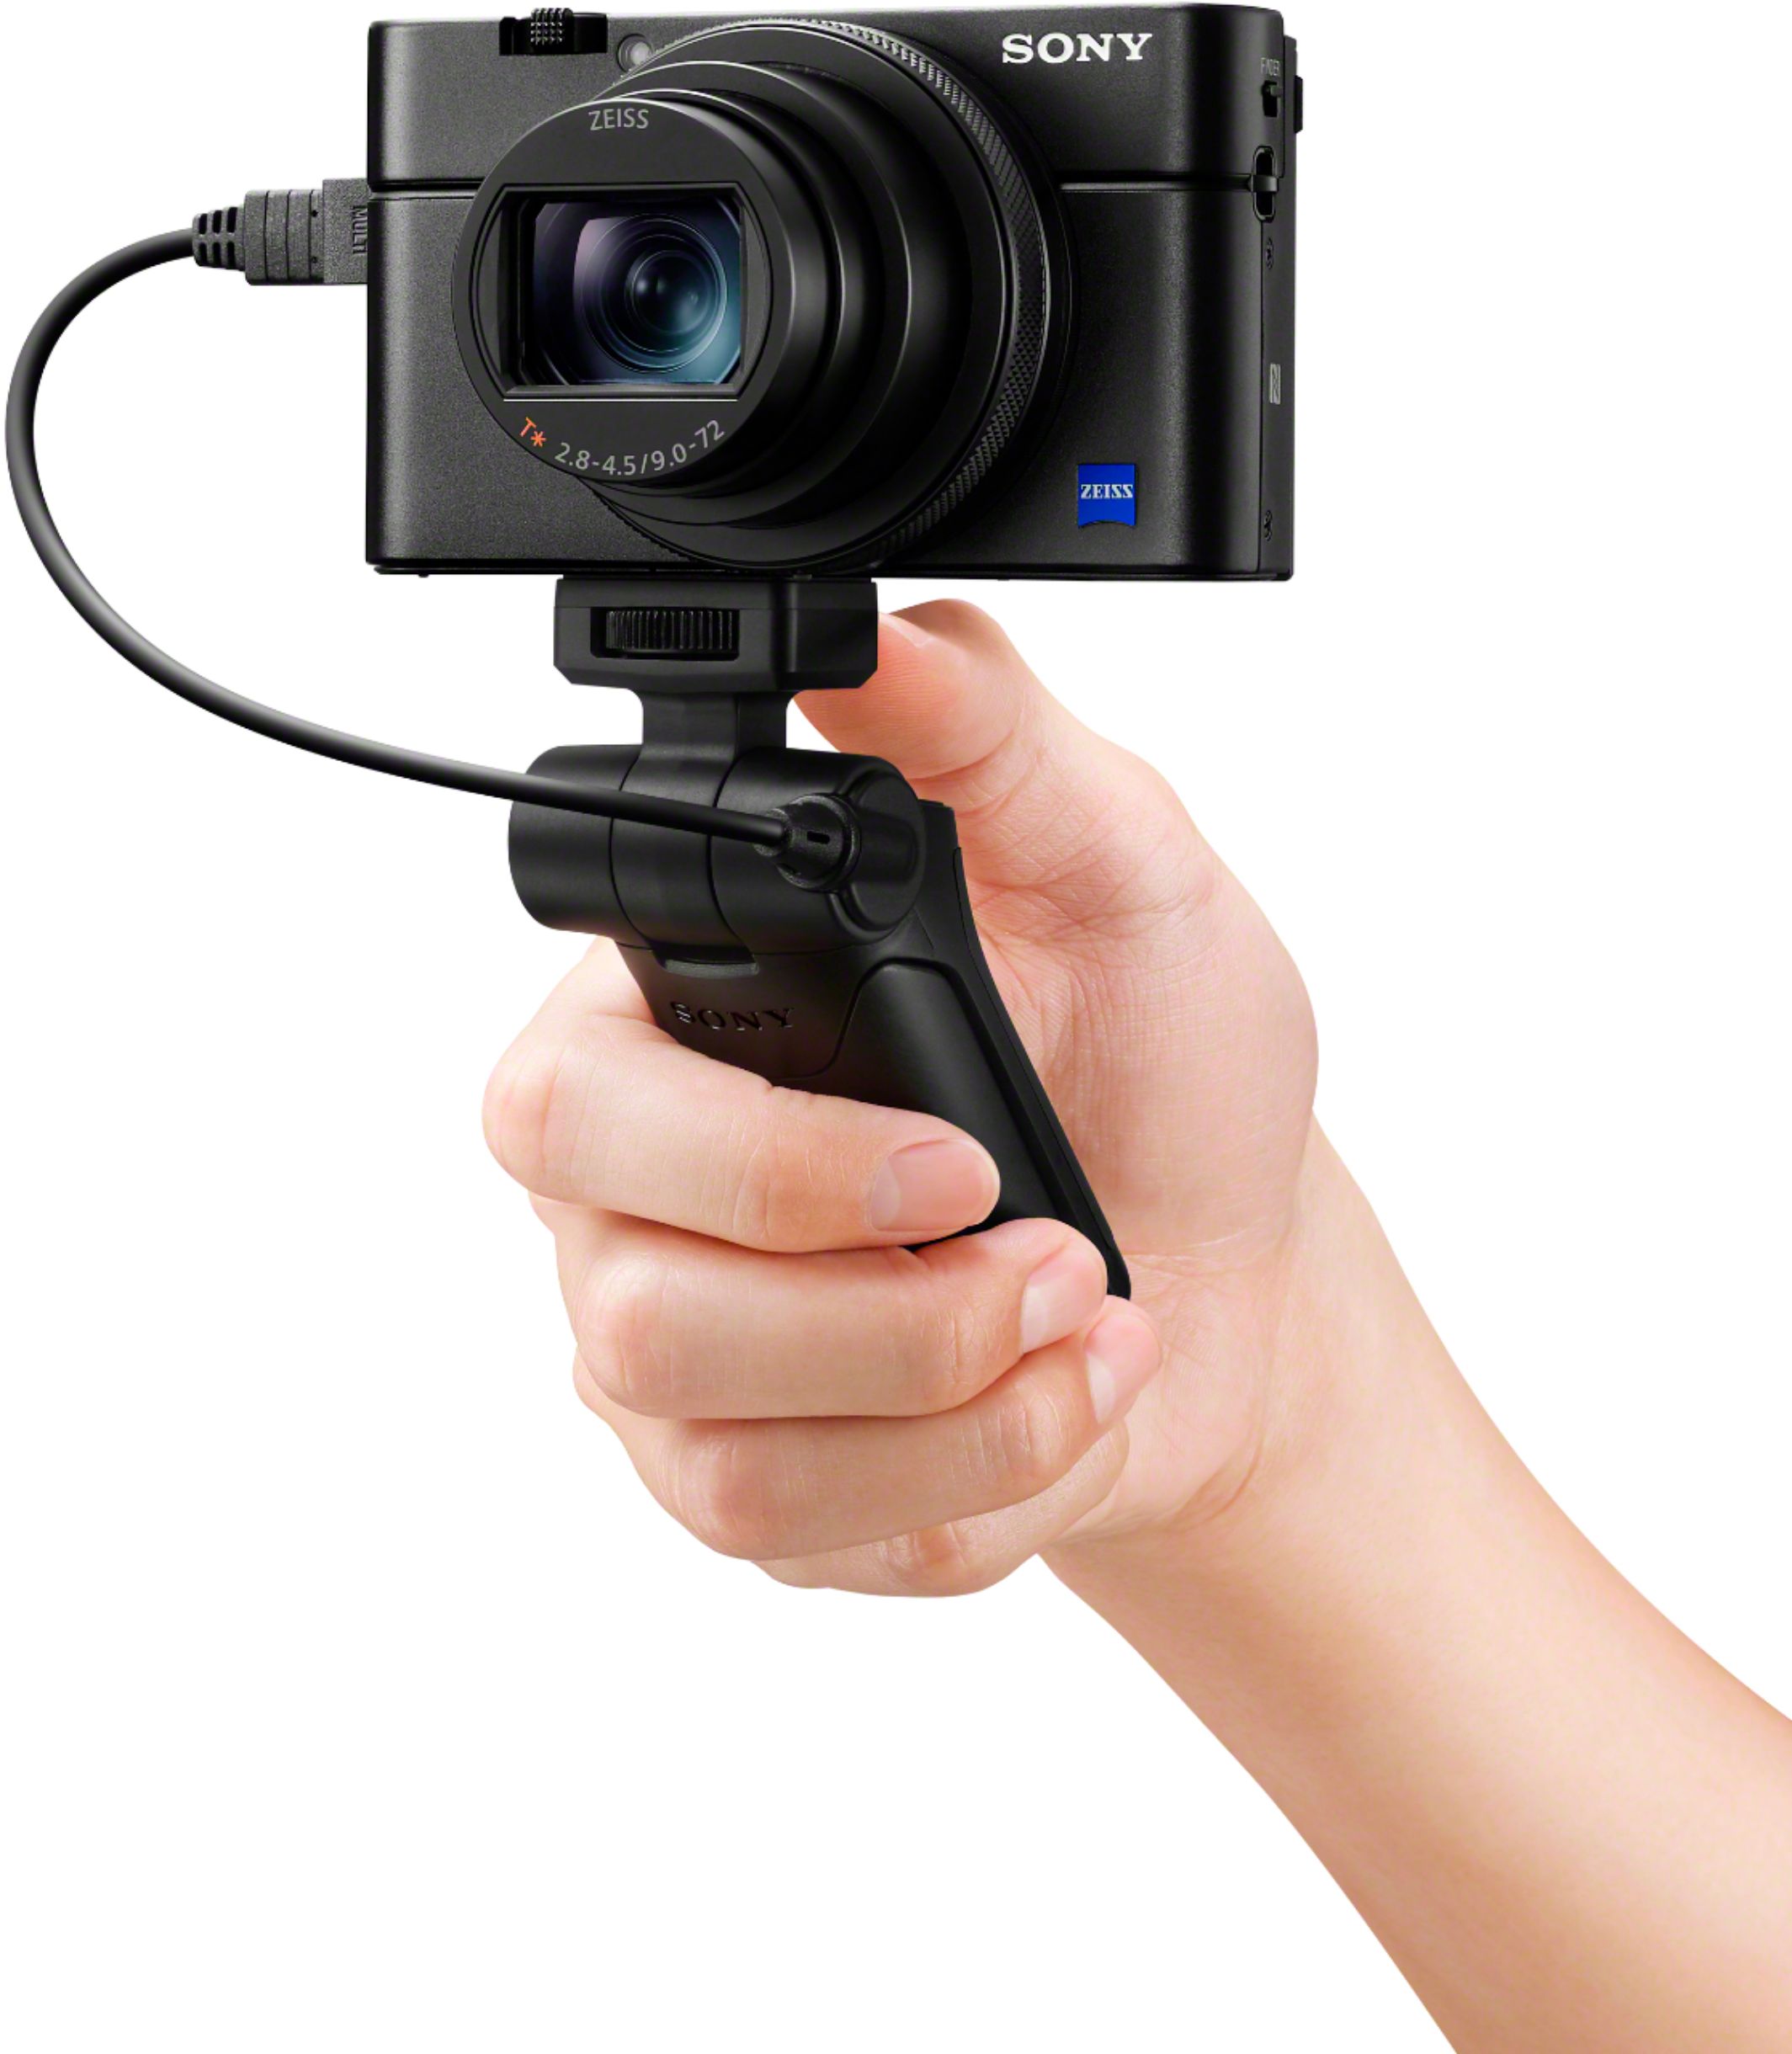 Sony Cyber-shot RX100 VII 20.1-Megapixel Digital Camera Black DSCRX100M7/B  - Best Buy